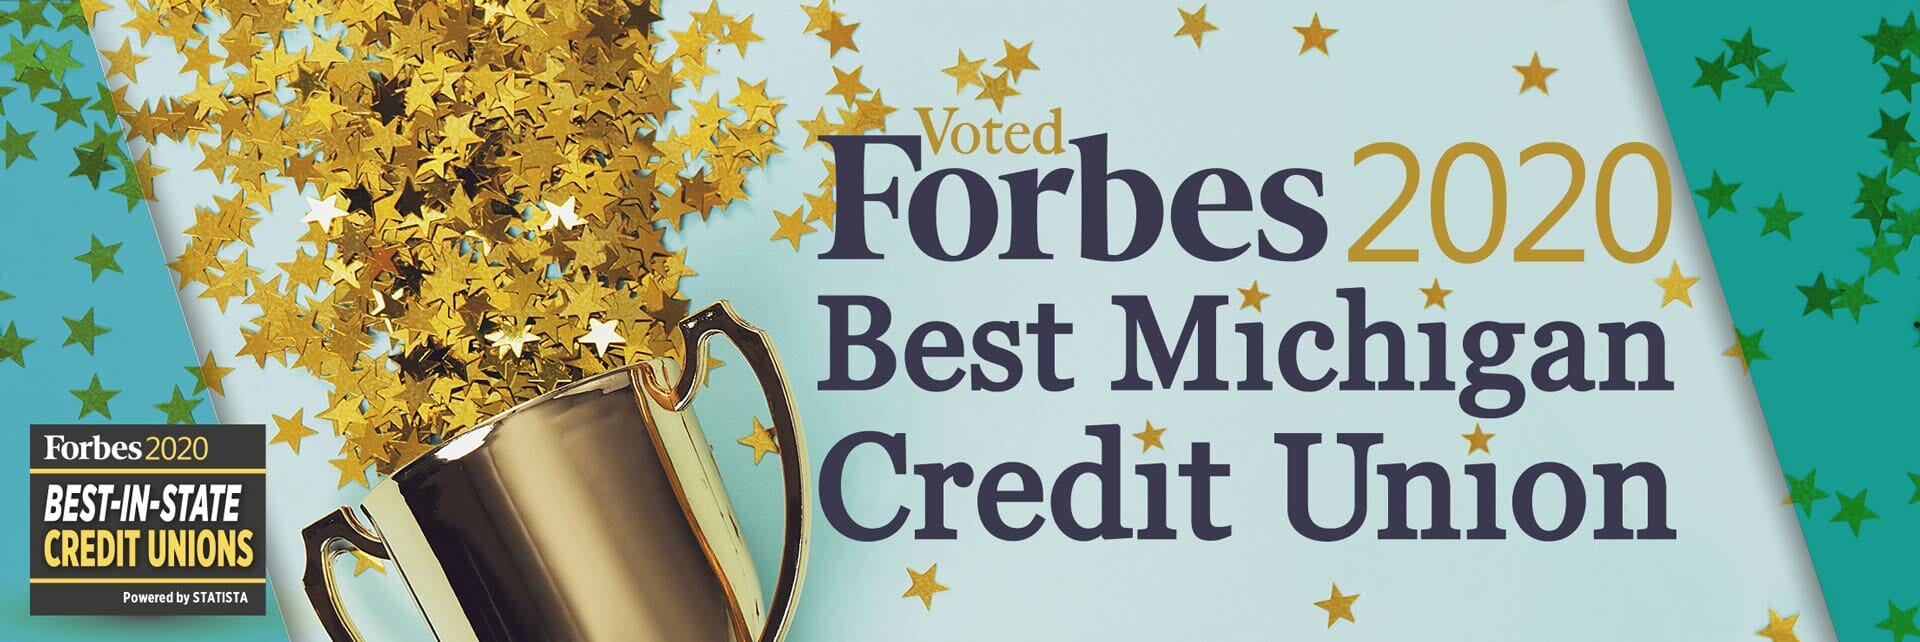 Forbes 2020 Best Michigan Credit Union